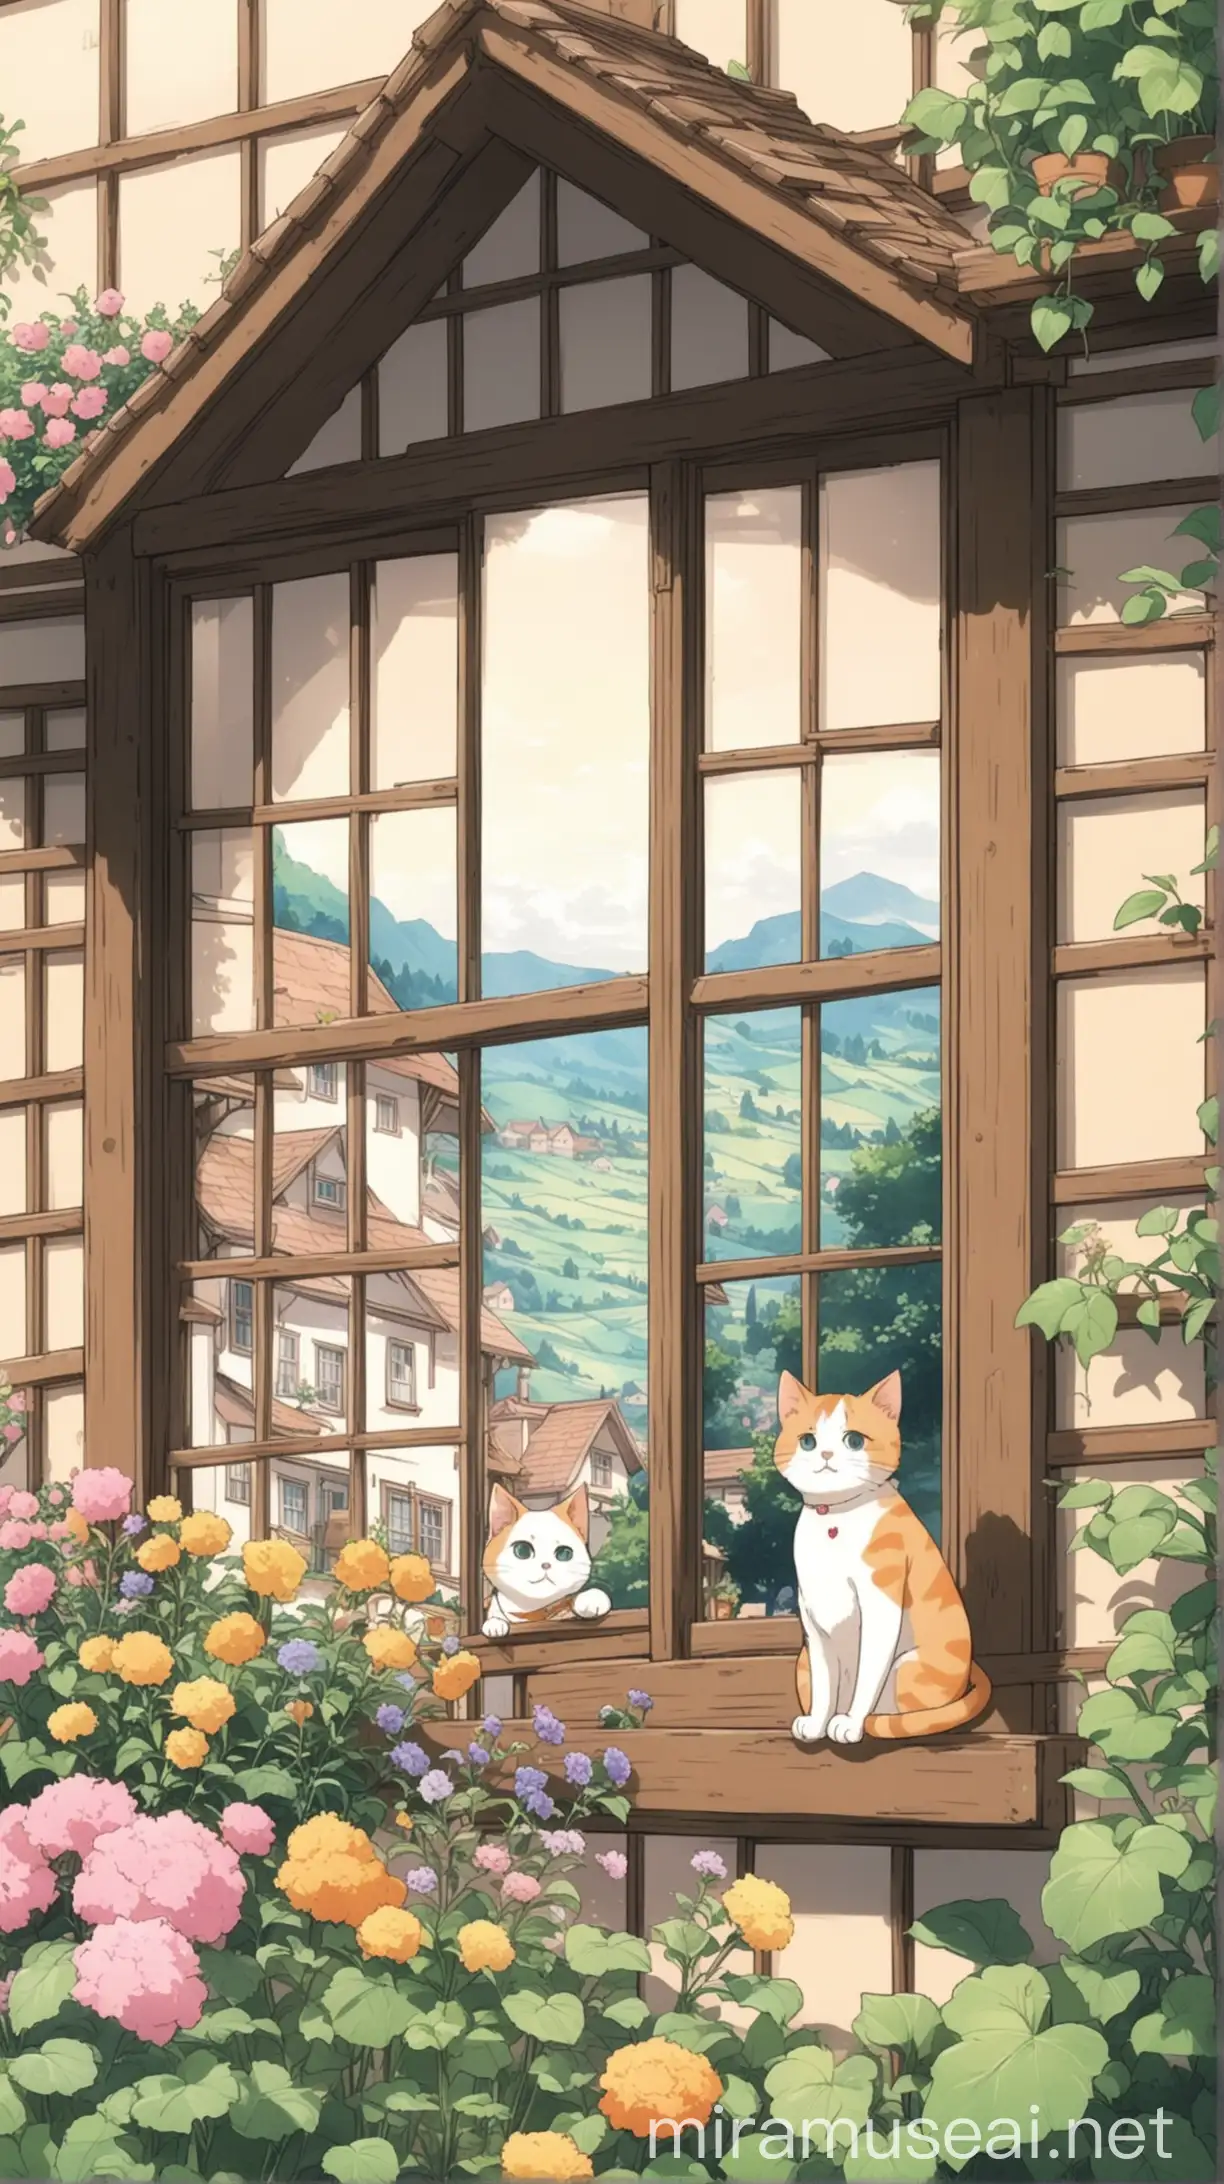 Charming Anime Cat Enjoying Garden View from Window